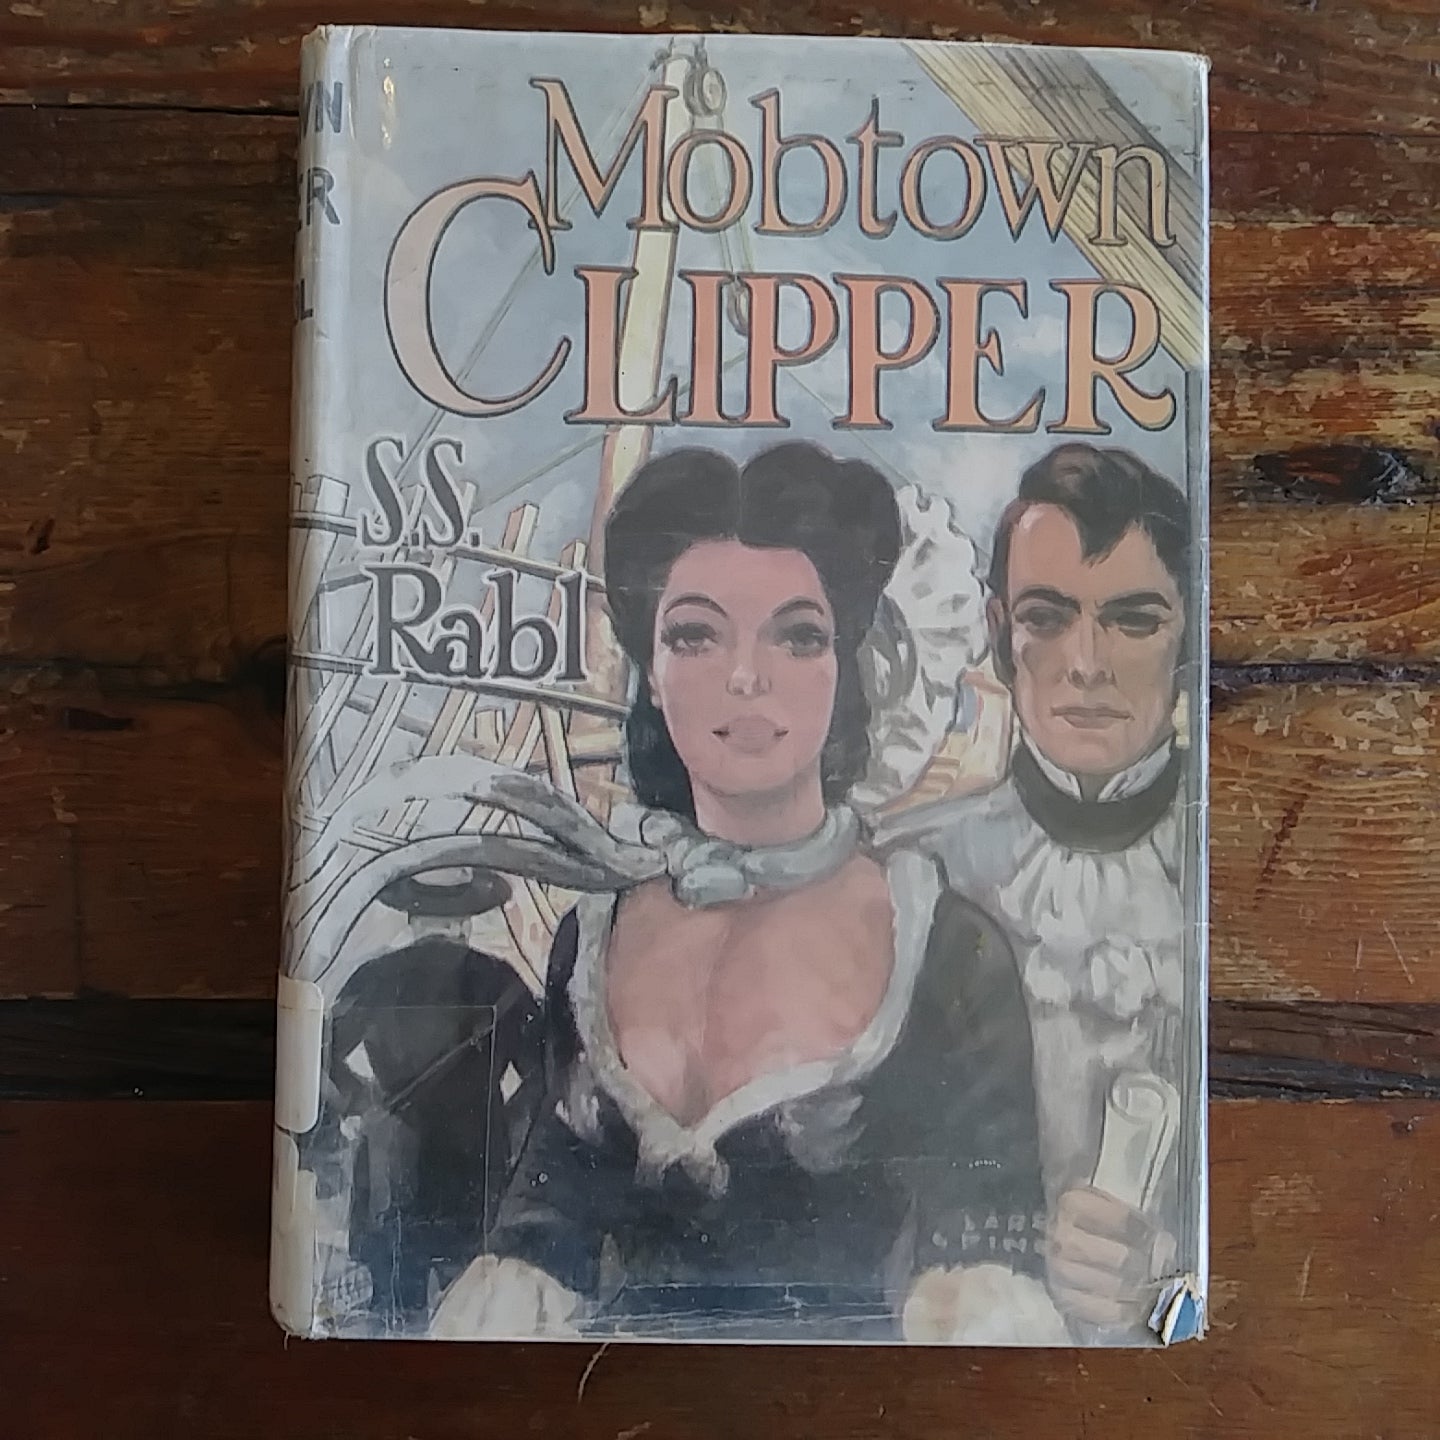 Book, "Mobtown Clipper"